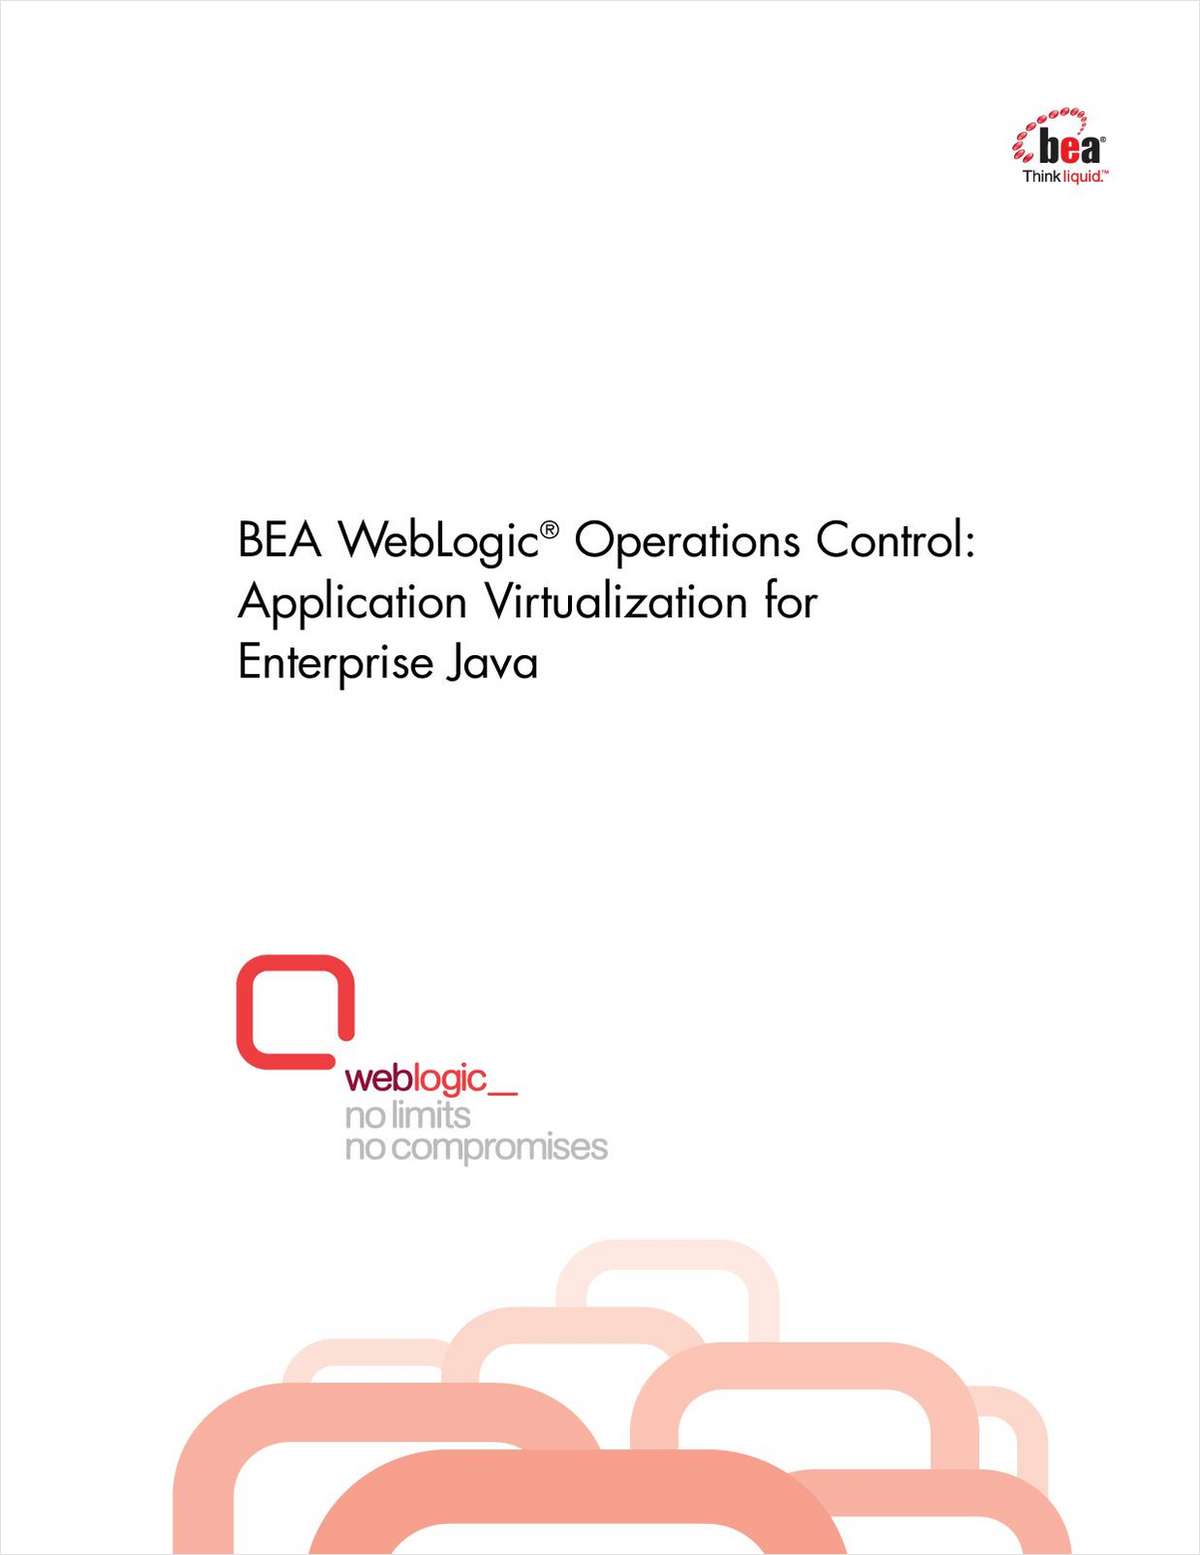 BEA WebLogic® Operations Control: Application Virtualization for Enterprise Java